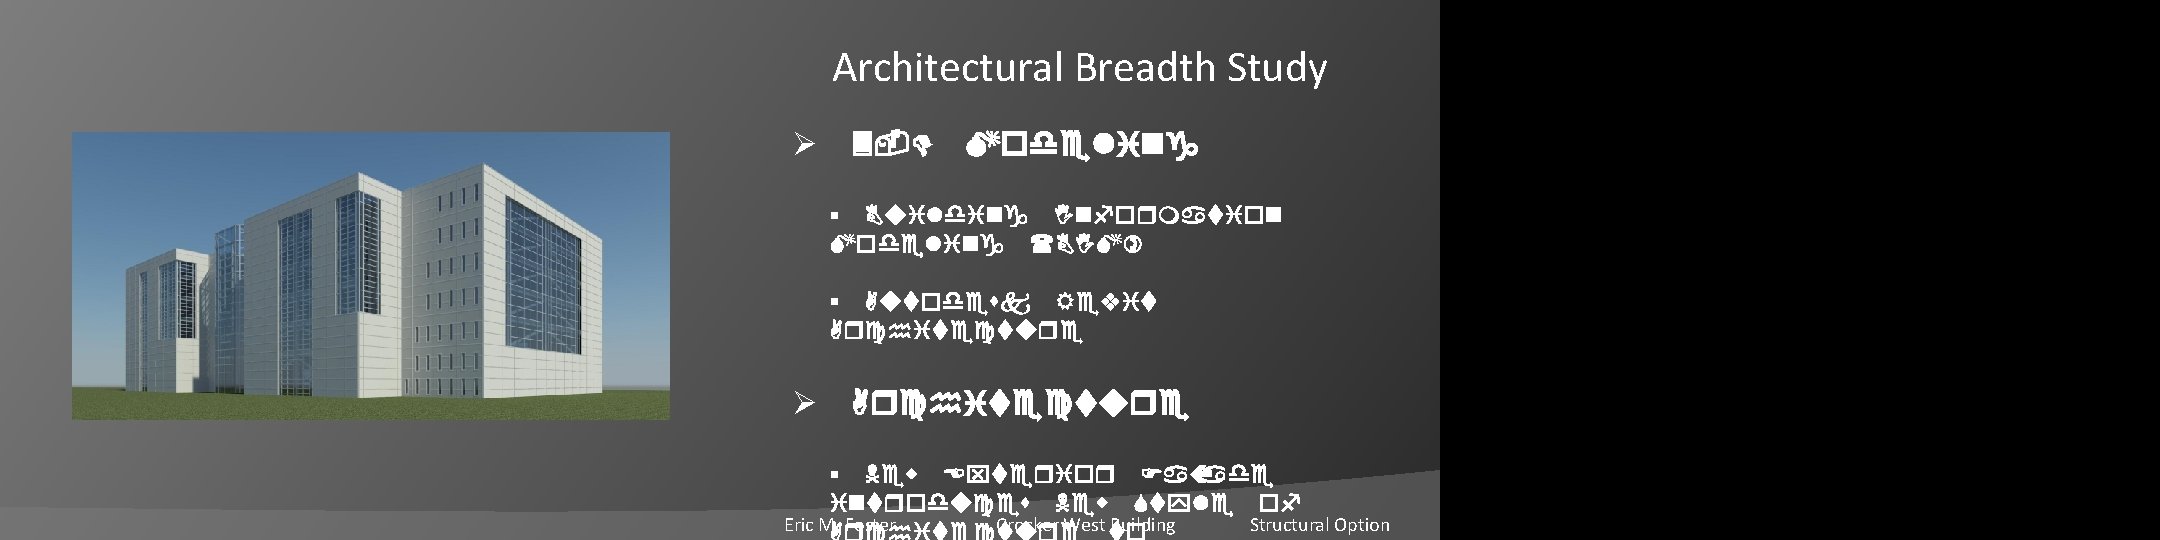 Architectural Breadth Study Ø 3 -D Modeling § Building Information Modeling (BIM) § Autodesk